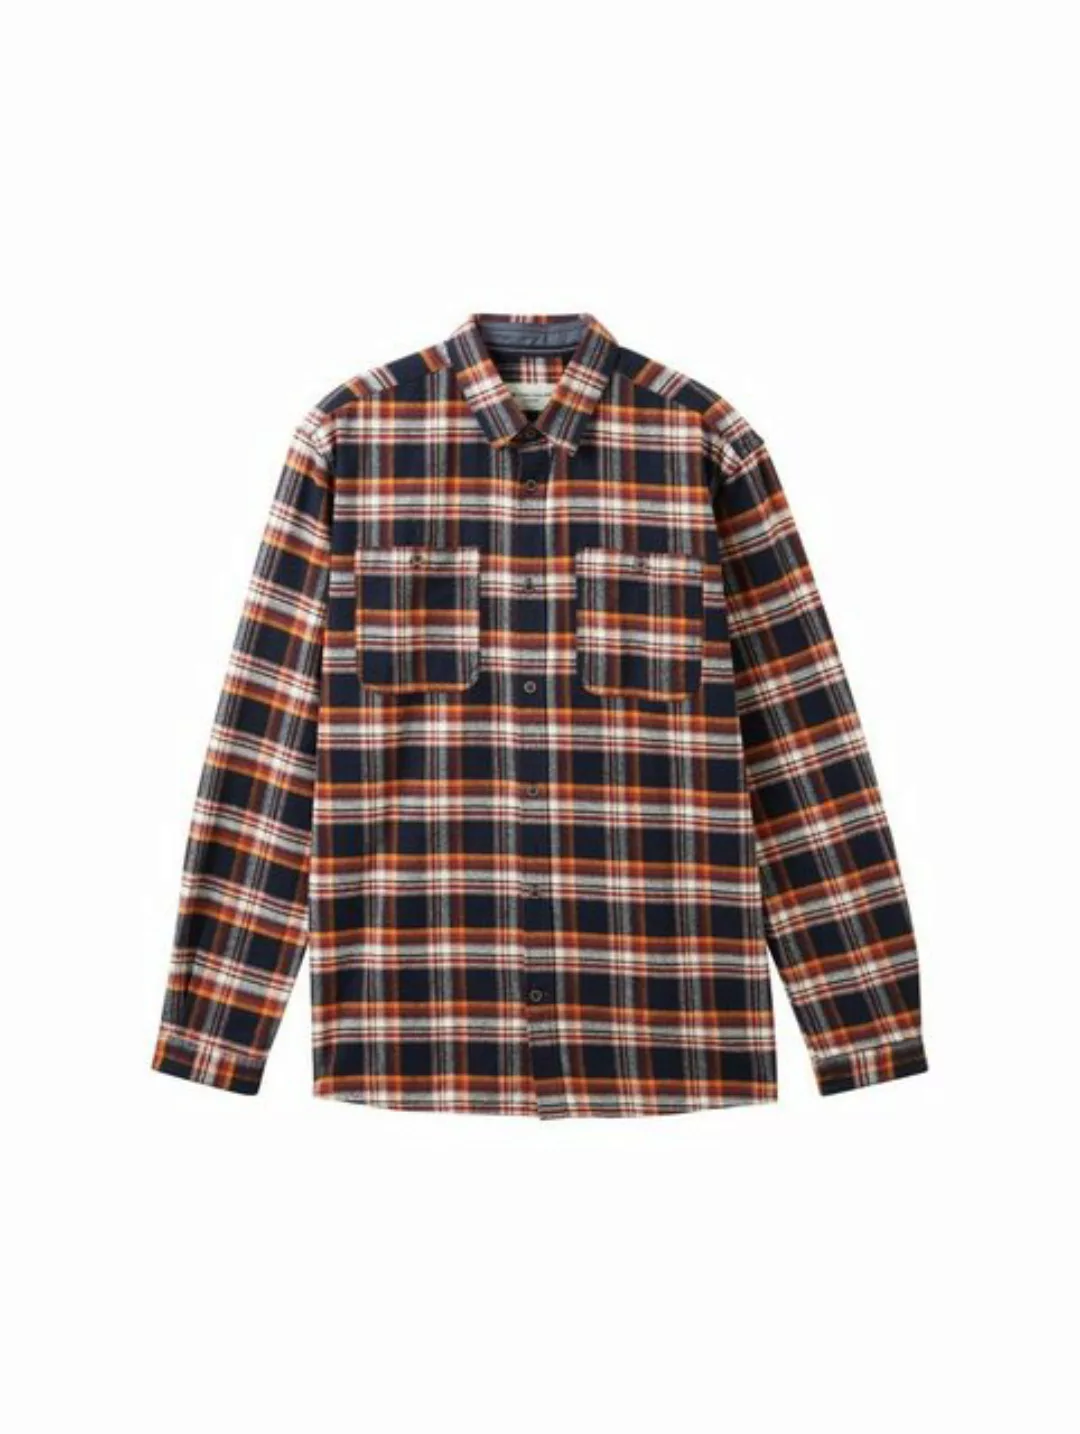 Tom Tailor Herren Langarm Hemd CHECKED - Relaxed Fit günstig online kaufen